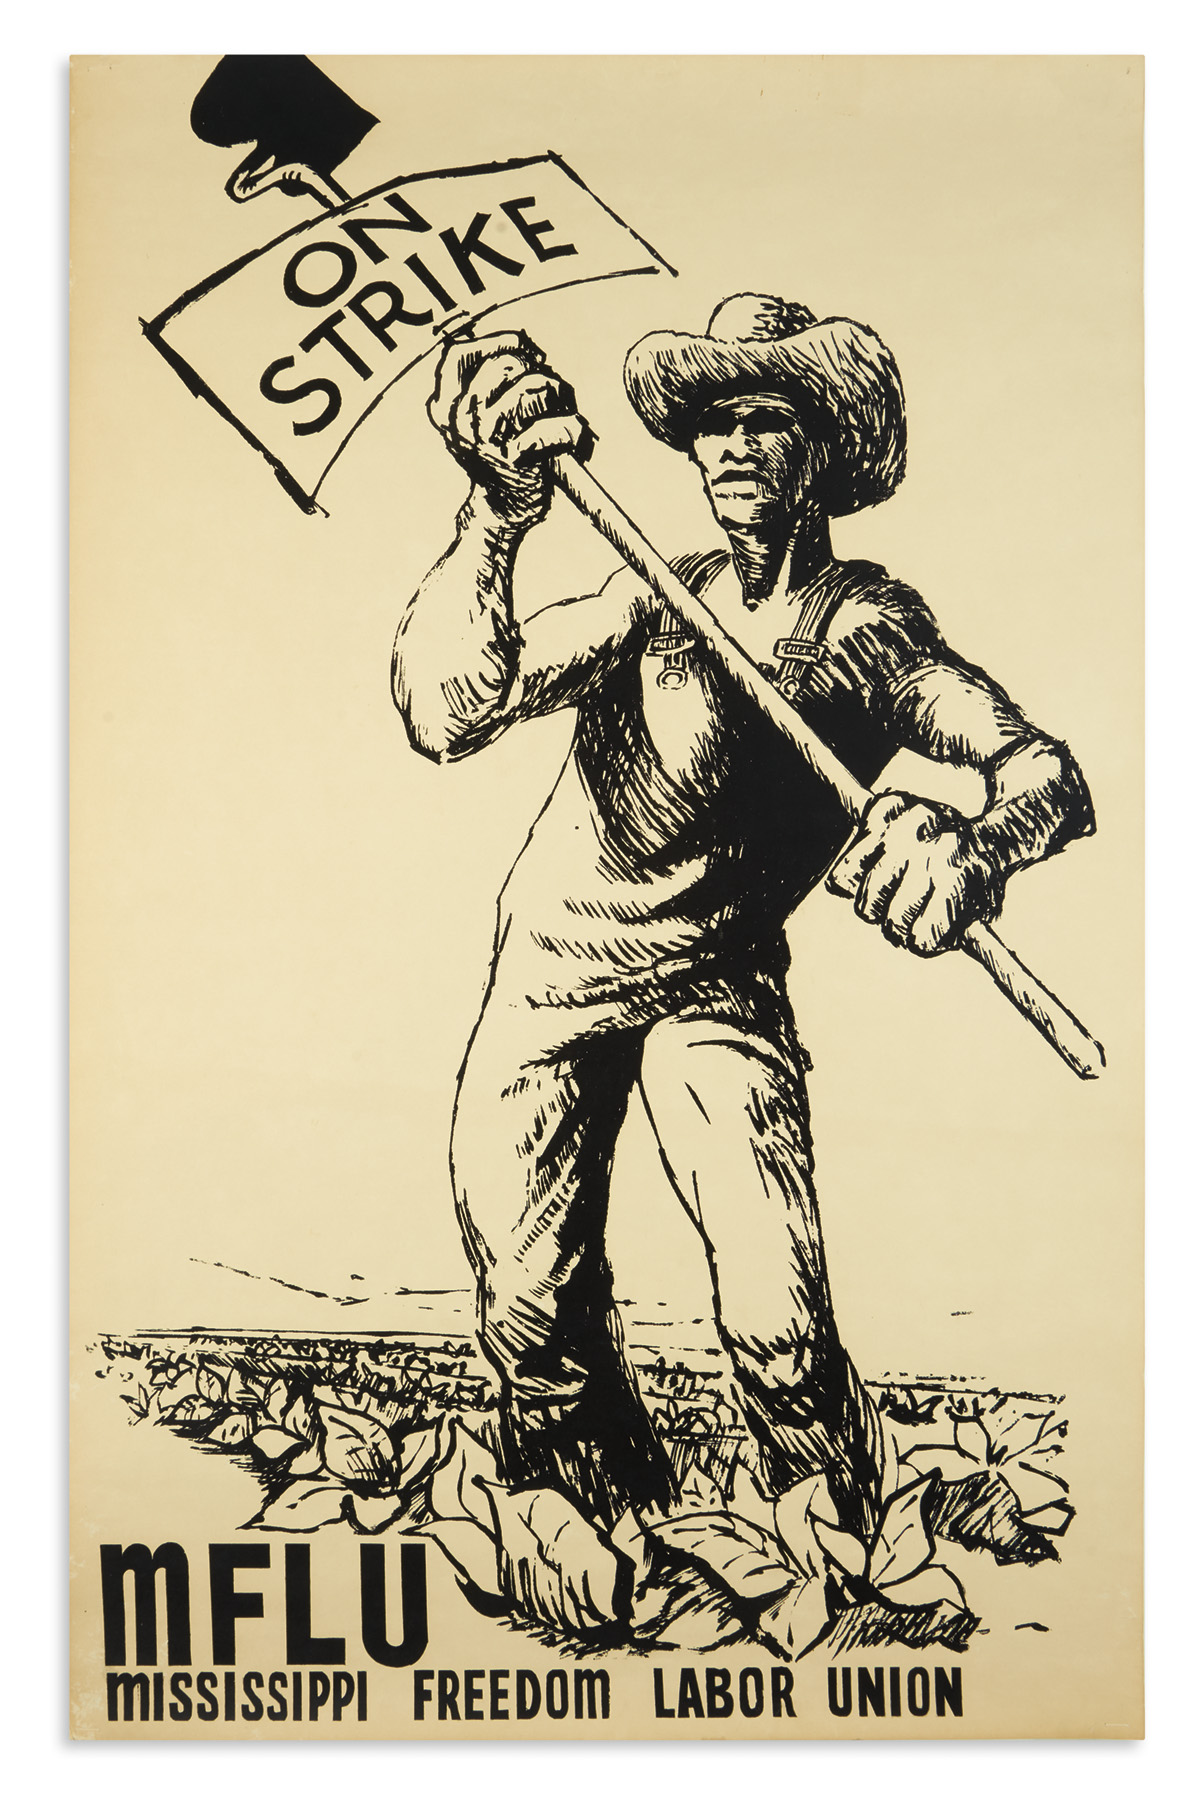 (CIVIL RIGHTS.) On Strike: MFLU, Mississippi Freedom Labor Union.